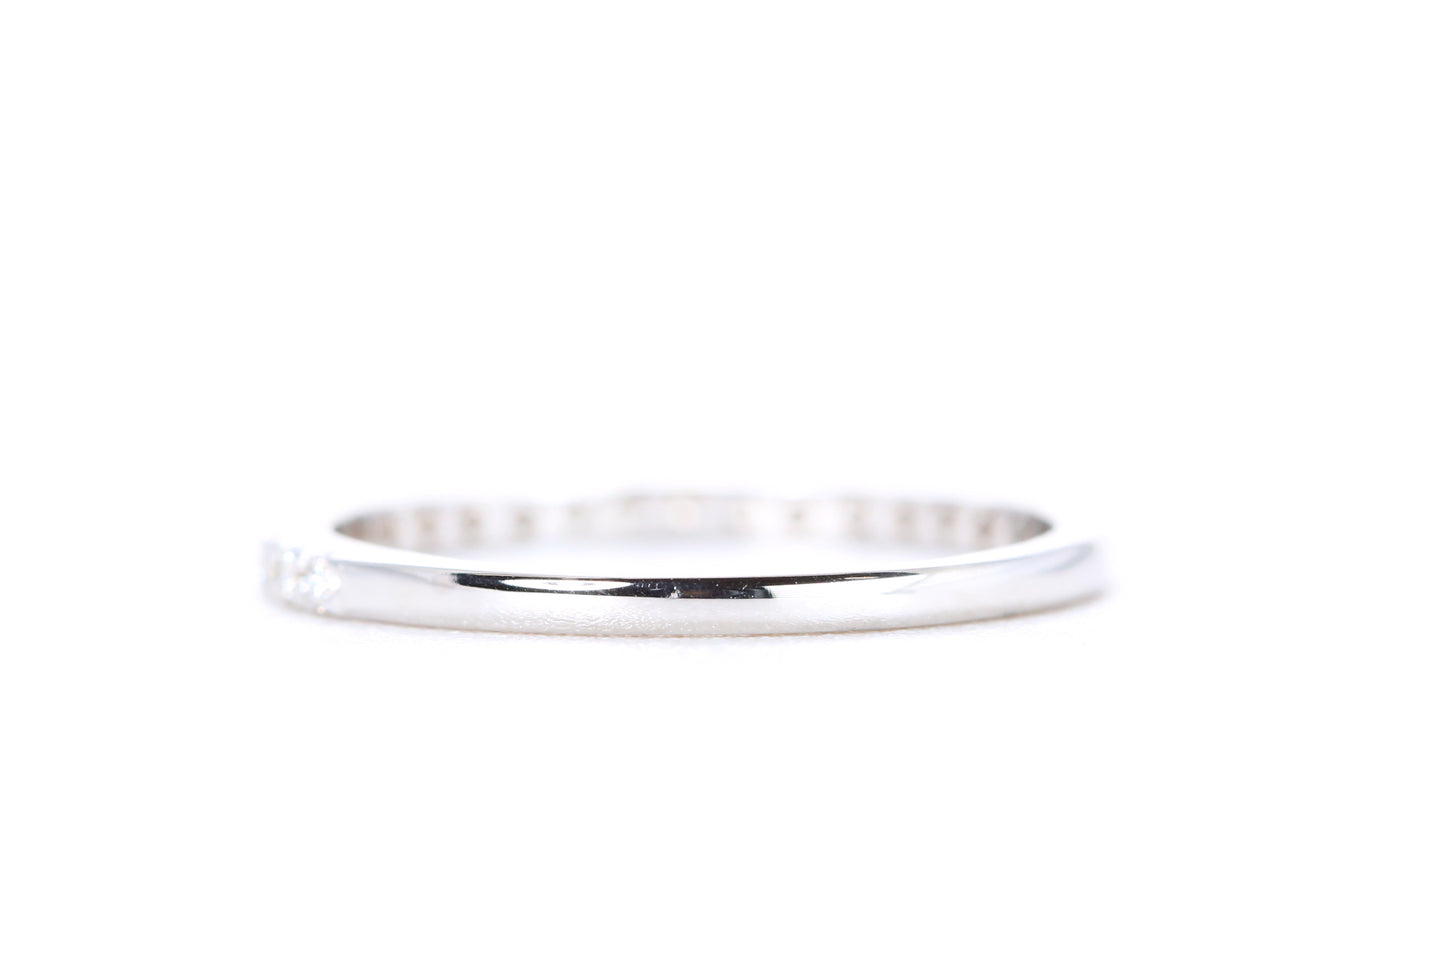 Micro Pavé Diamond Ring 1/4 Carat in White Gold